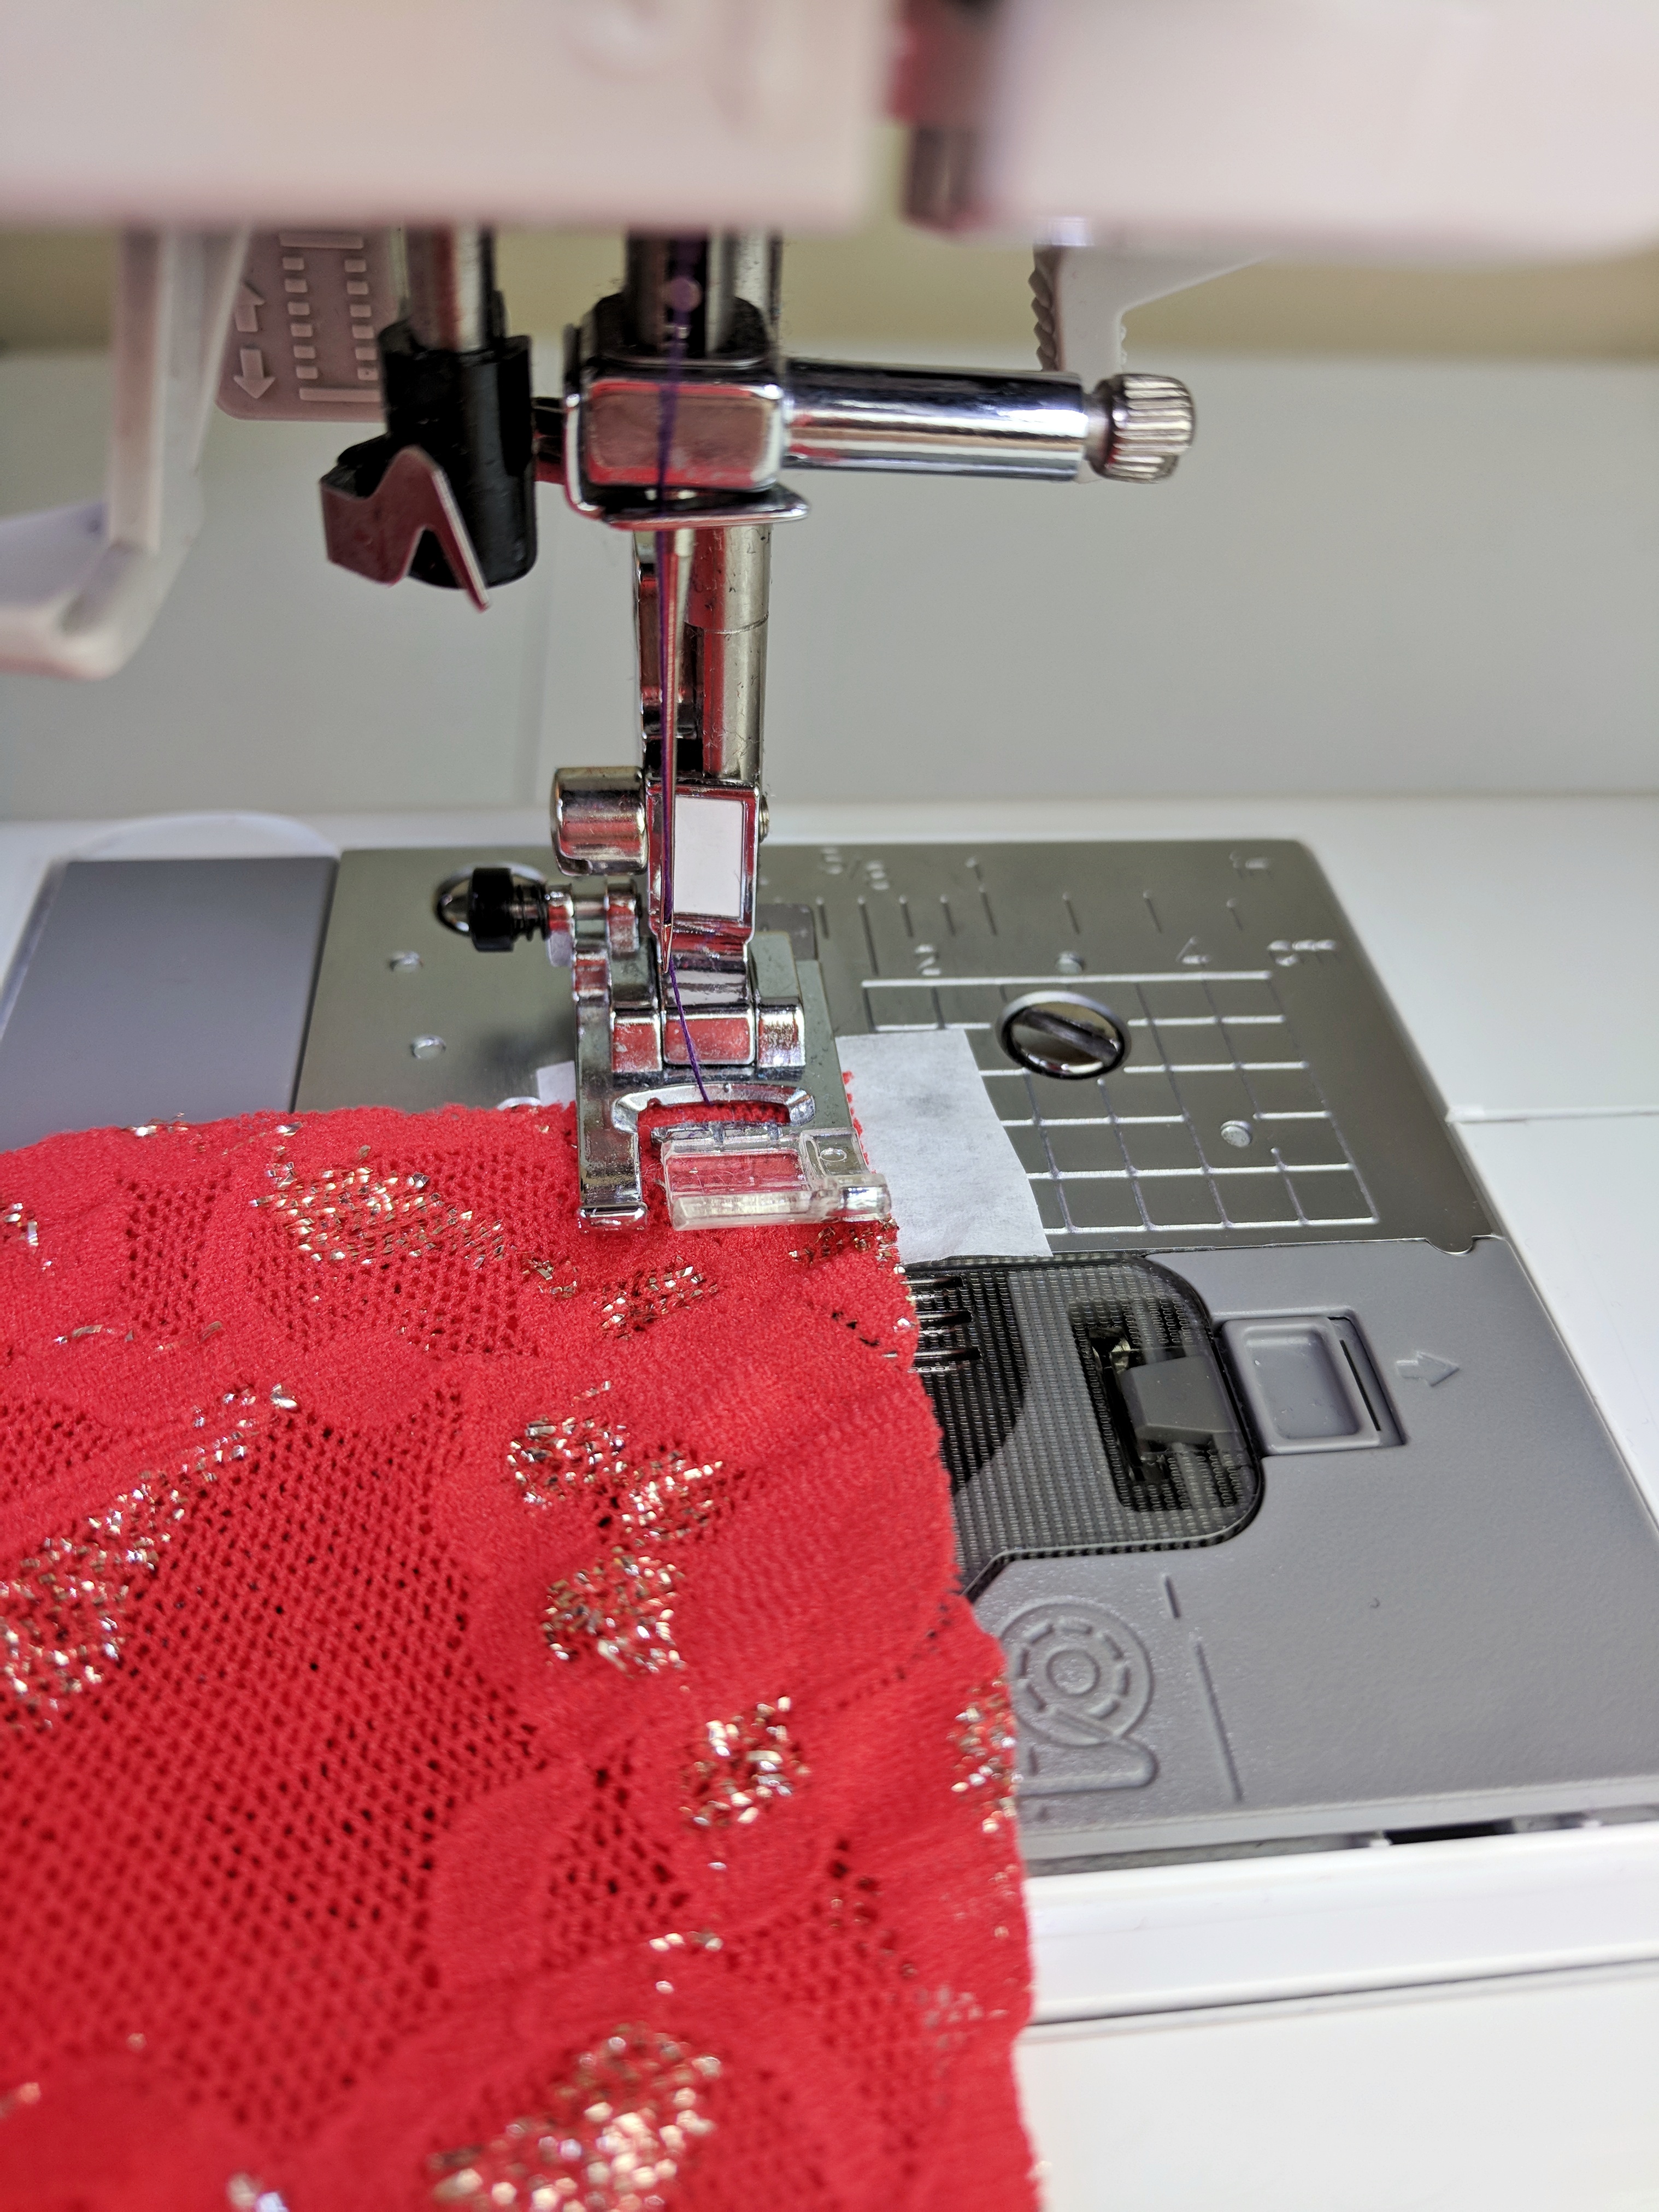 Papel de tecido debaixo das rendas na máquina de costura.